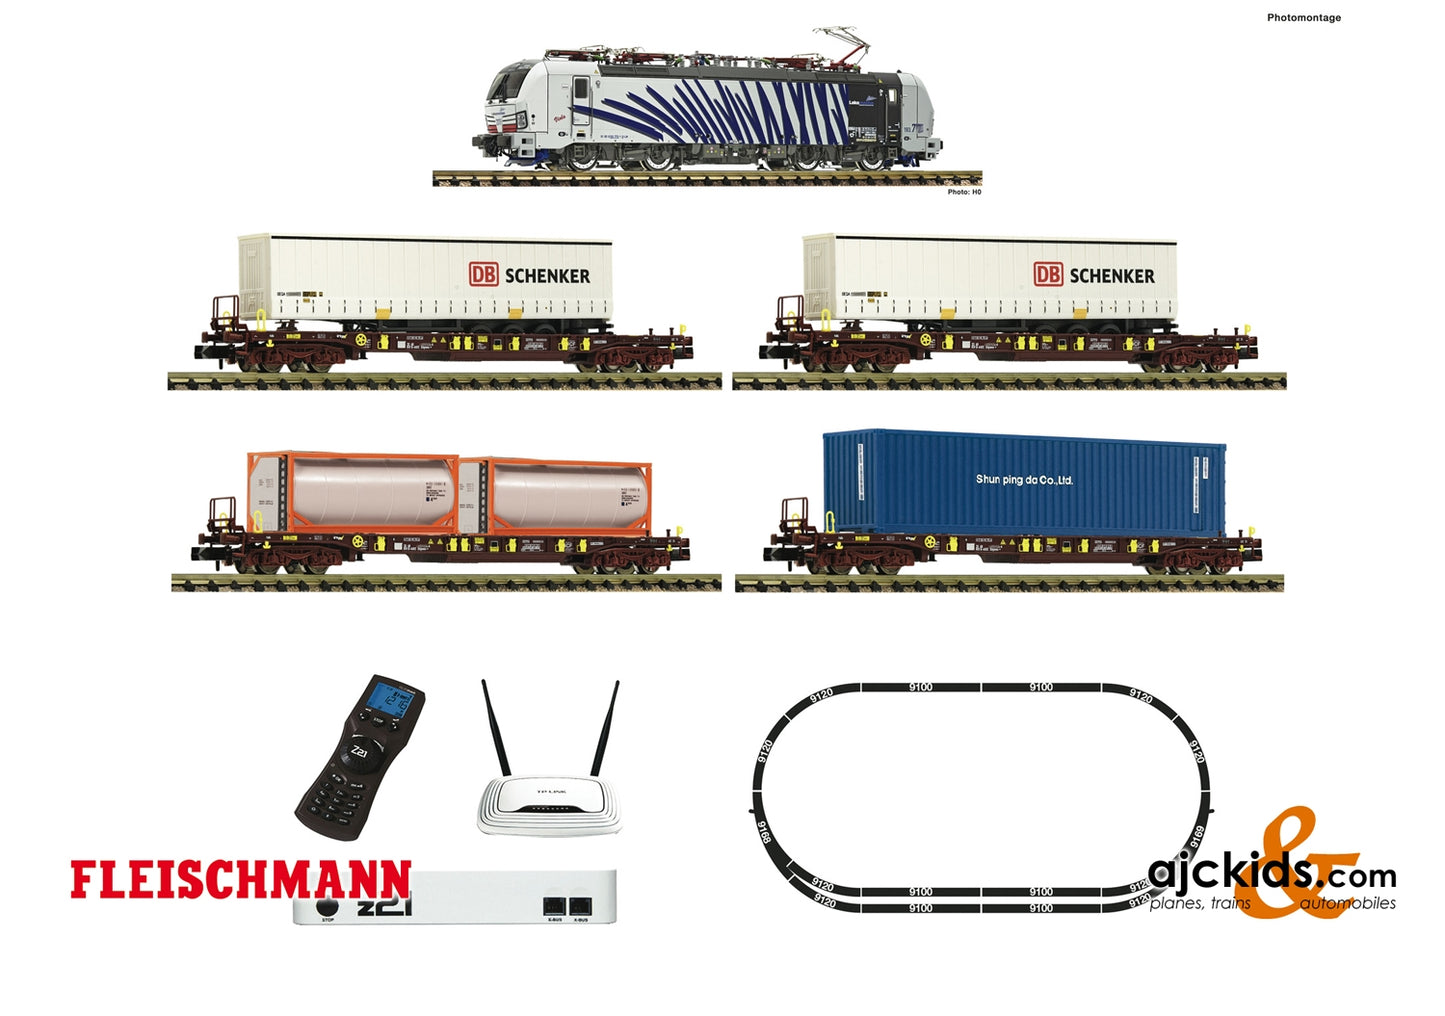 Fleischmann 931891 - z21 digital set: Electric locomotive class 193 and goods train